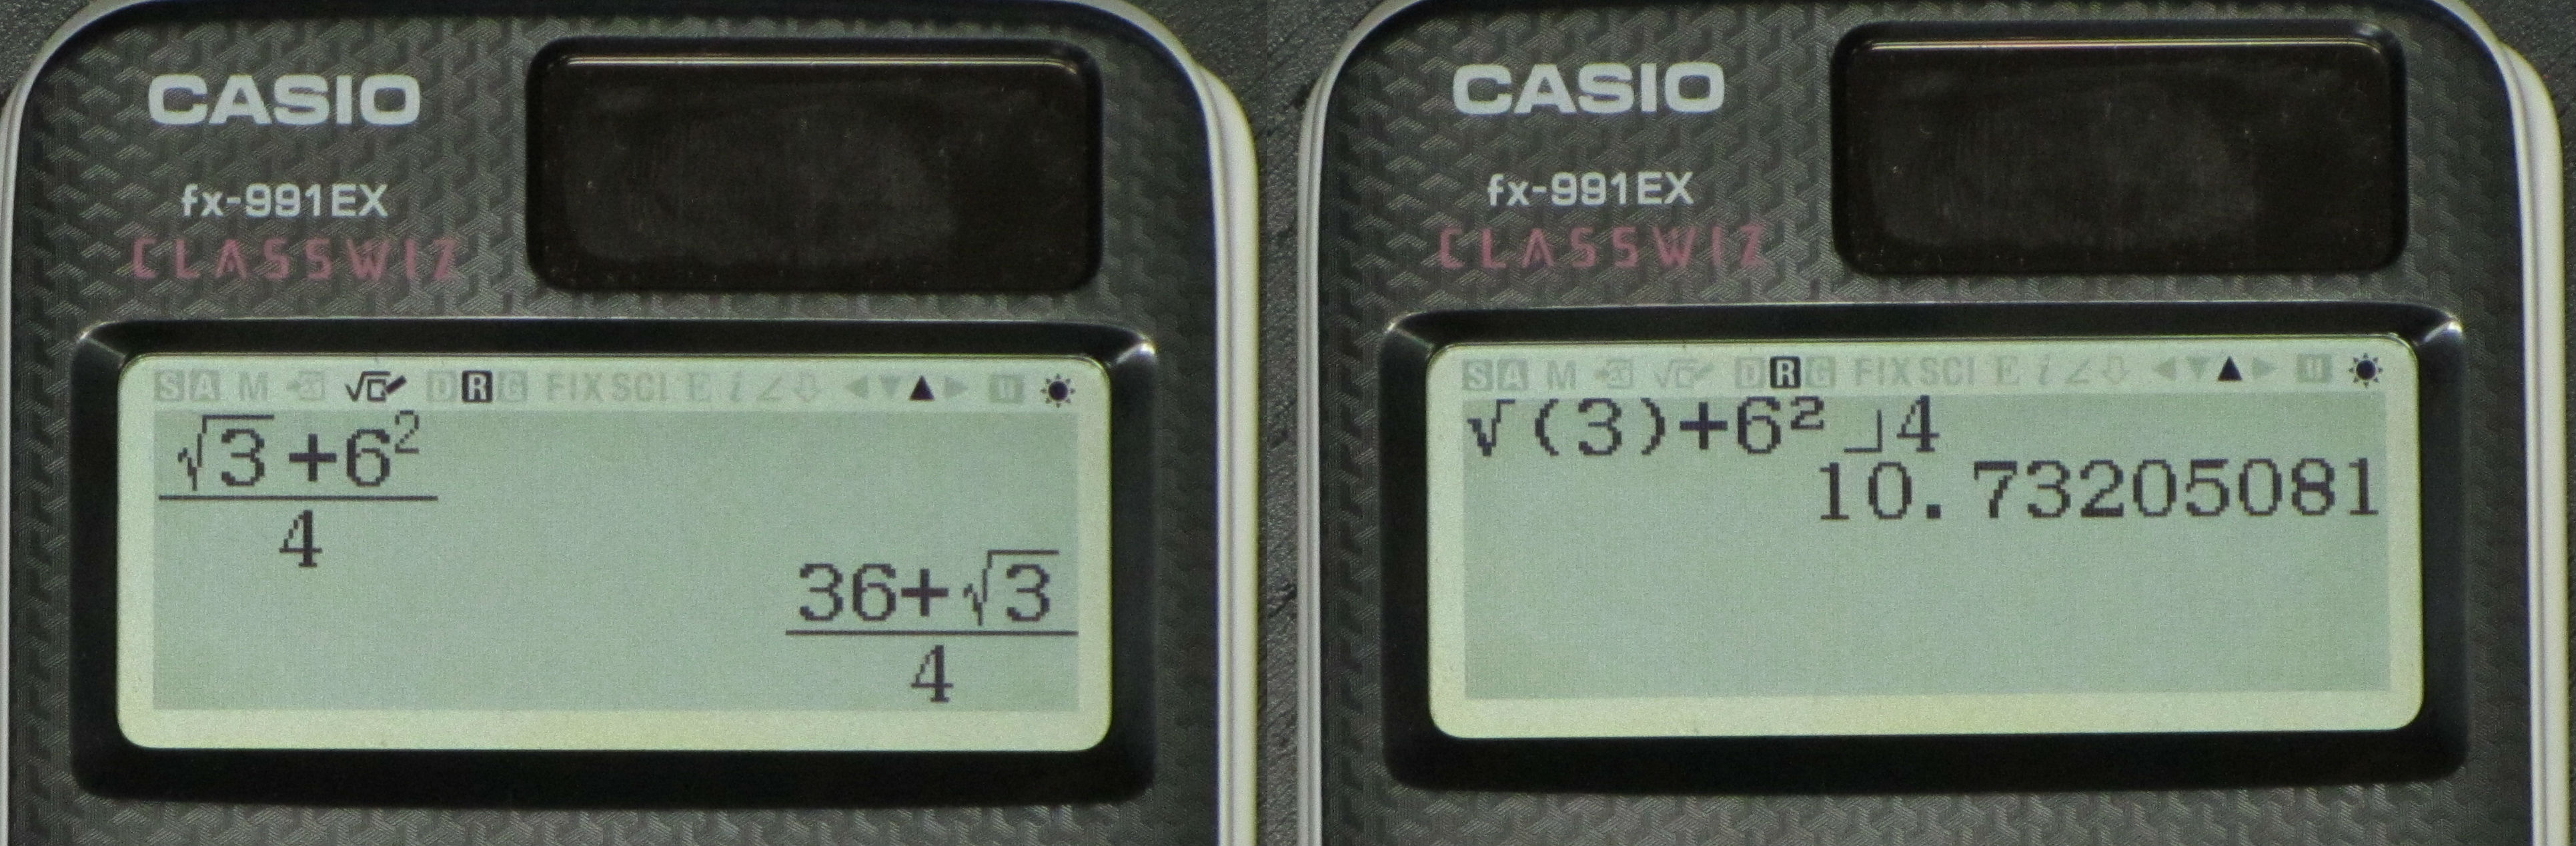 Casio Classwiz Fx 991ex Full Review Math Class Calculator - 